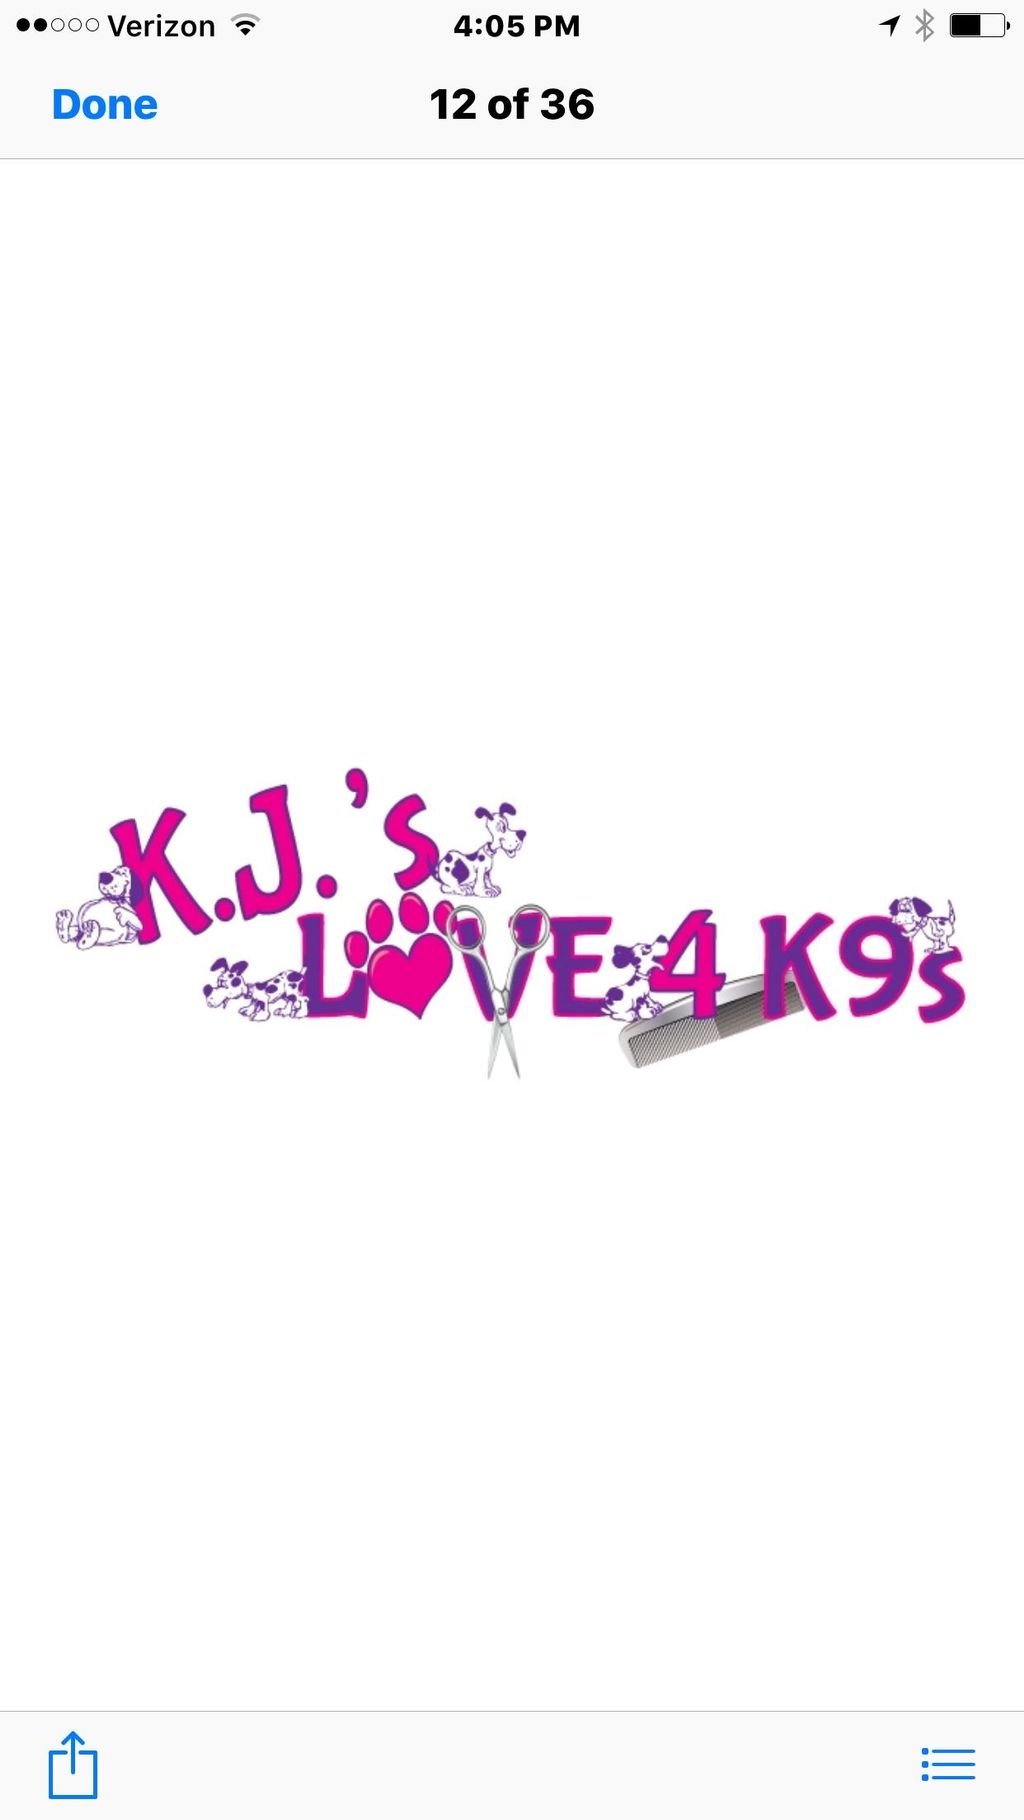 KJ'sLove4K9's Mobile dog grooming services